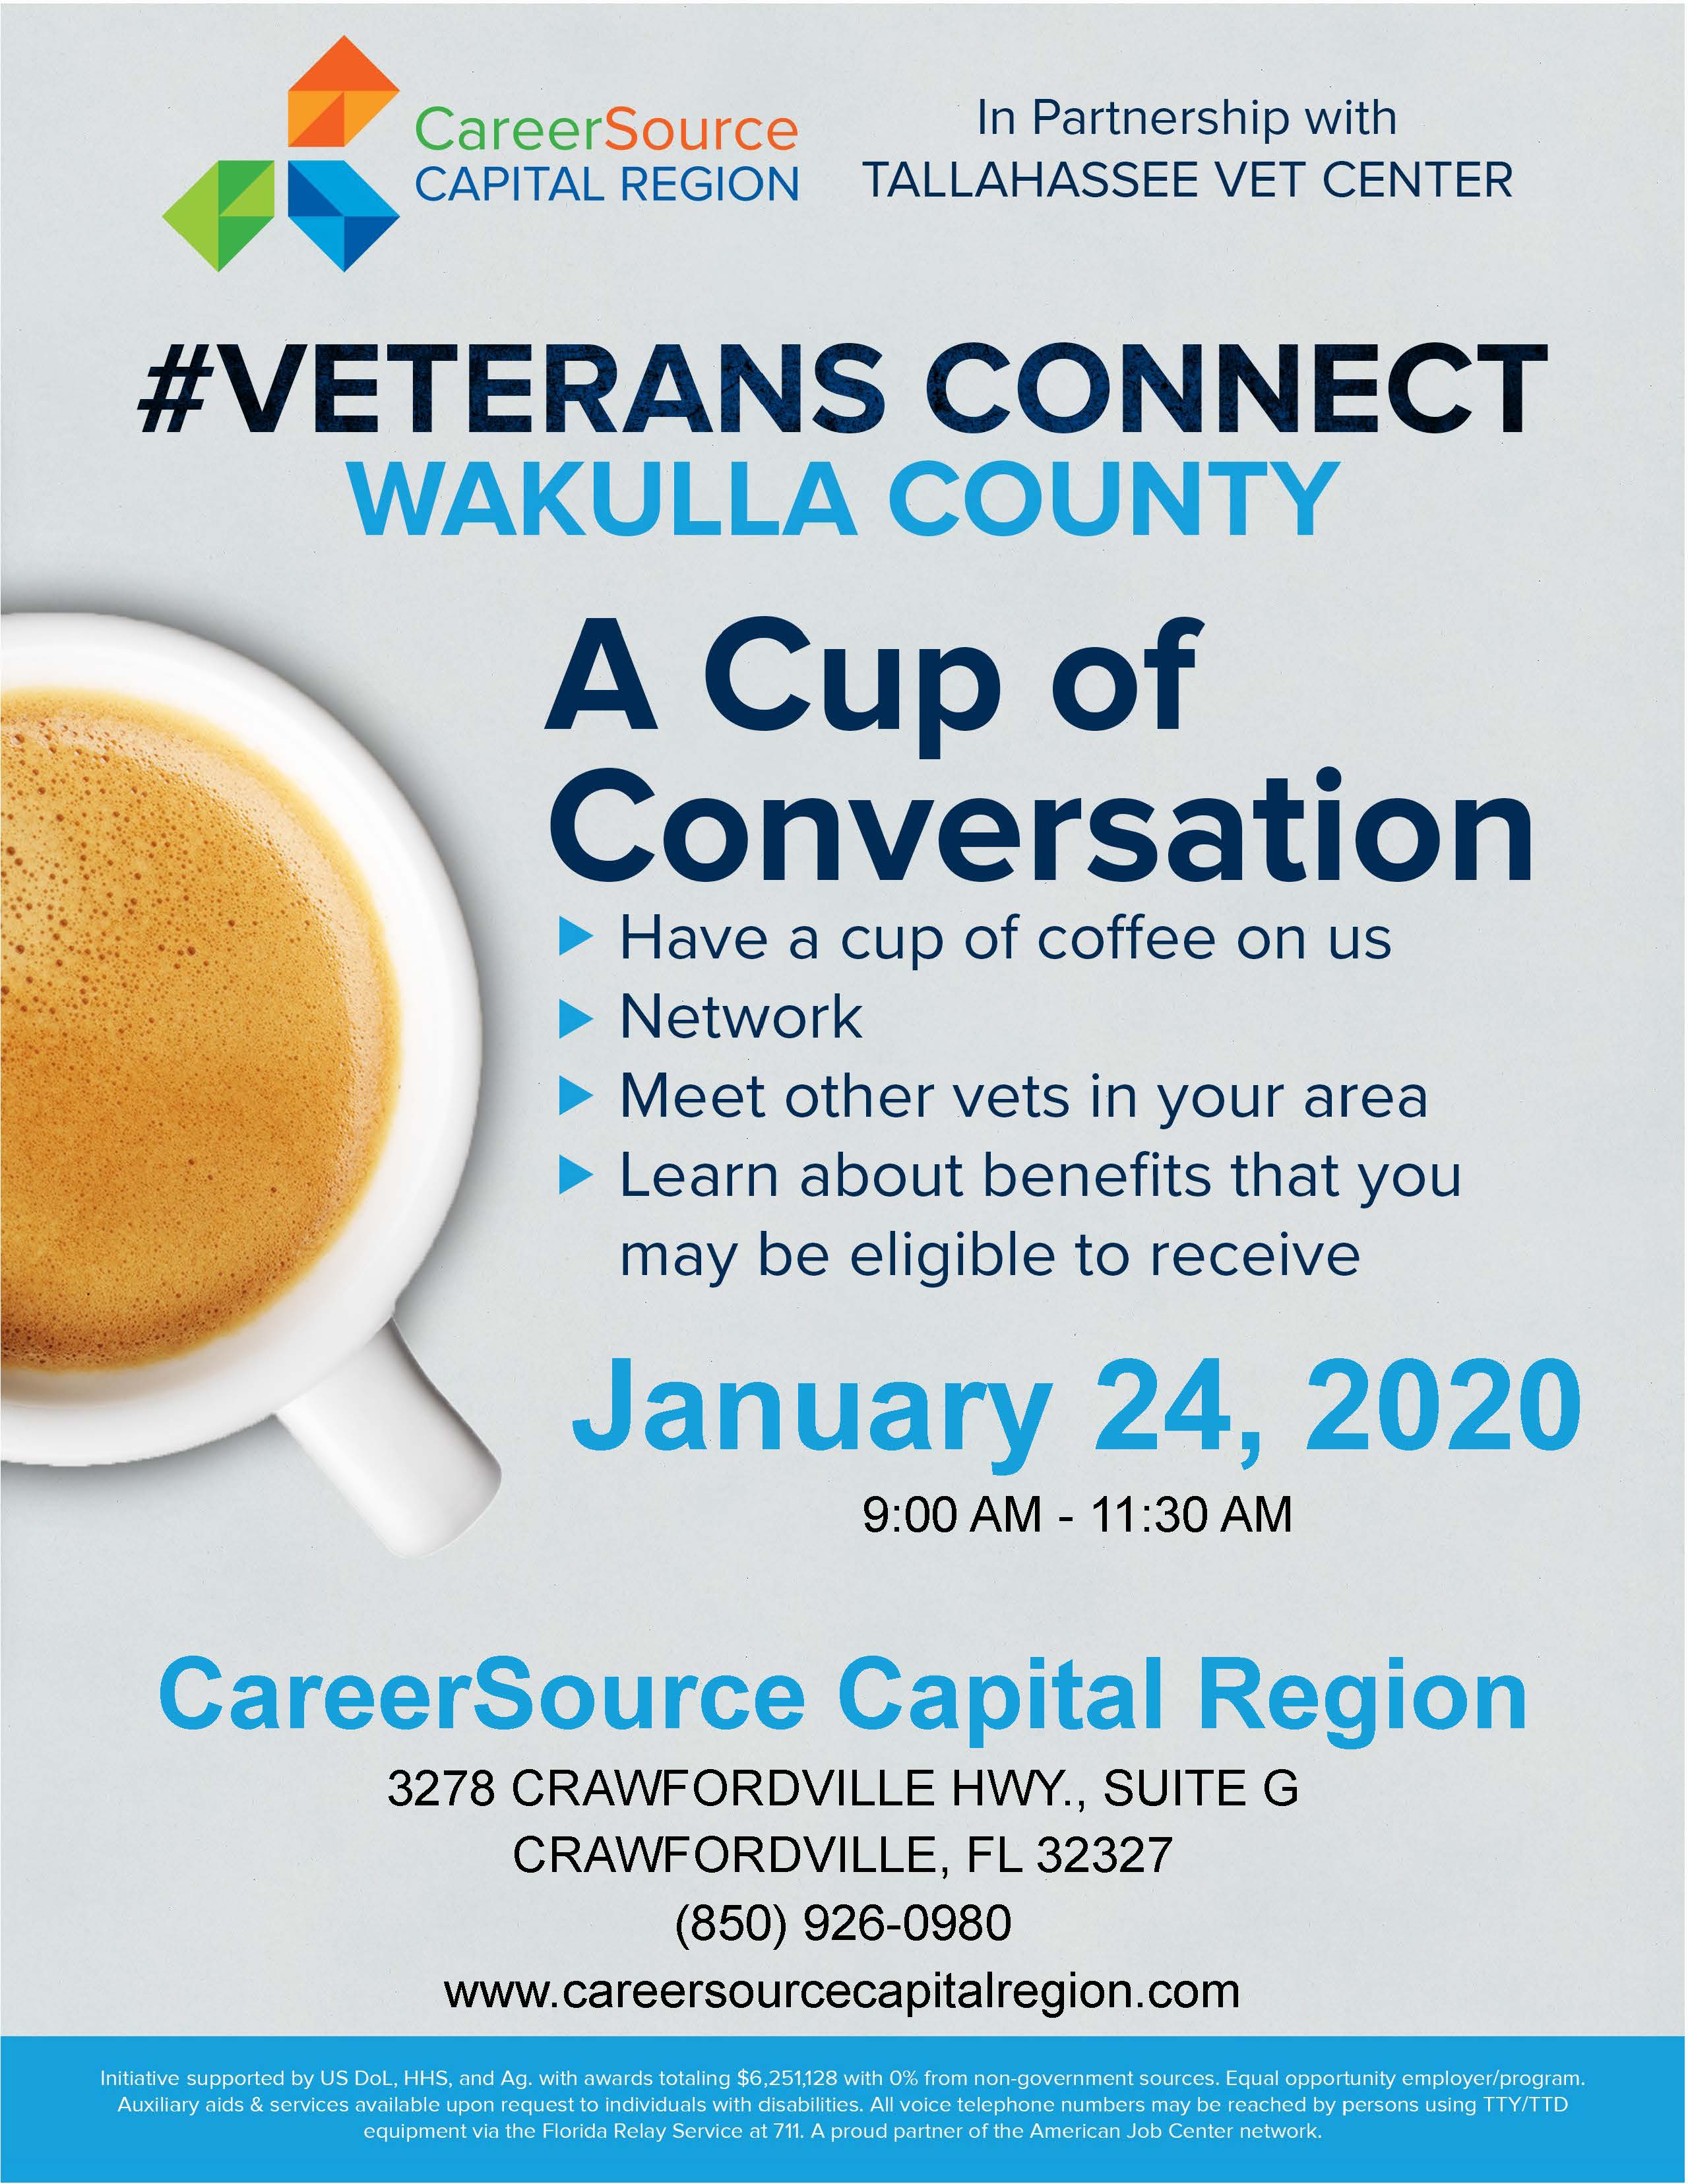 Wakulla Veterans Connect Cup of Conversation Jan 24 2020